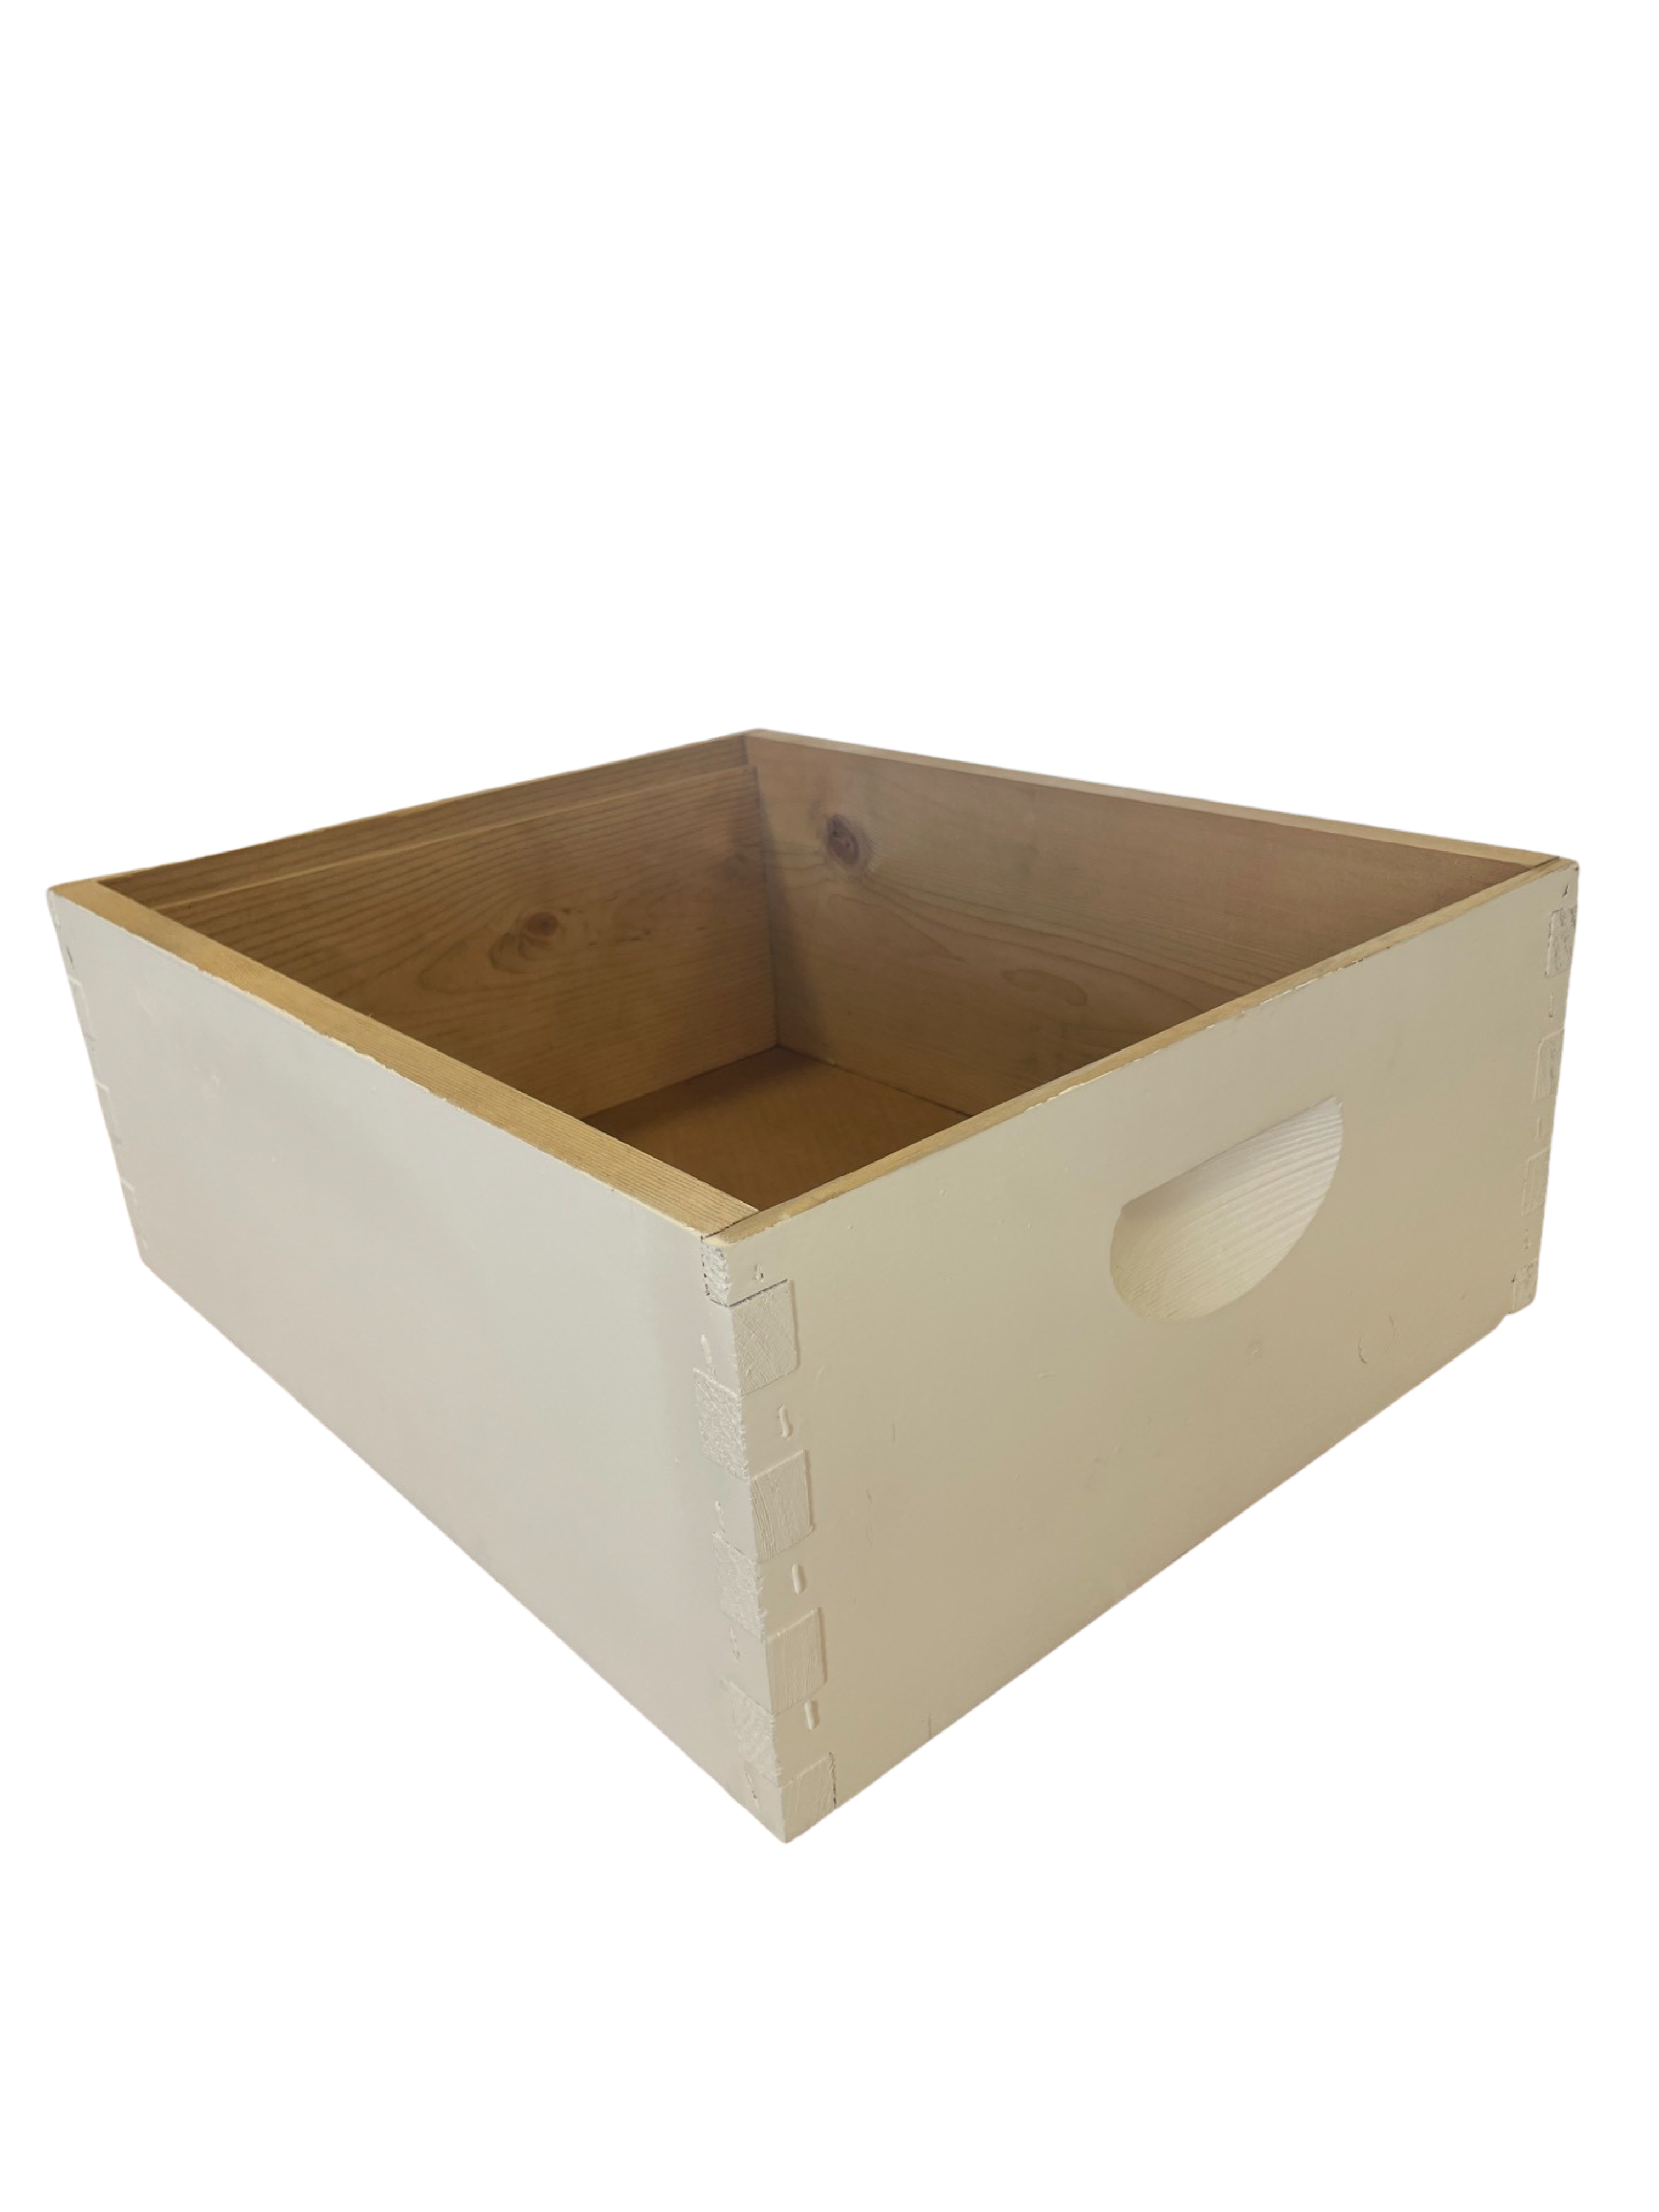 Dakota 7 (7 5/8") Hive Box | Treated | Painted